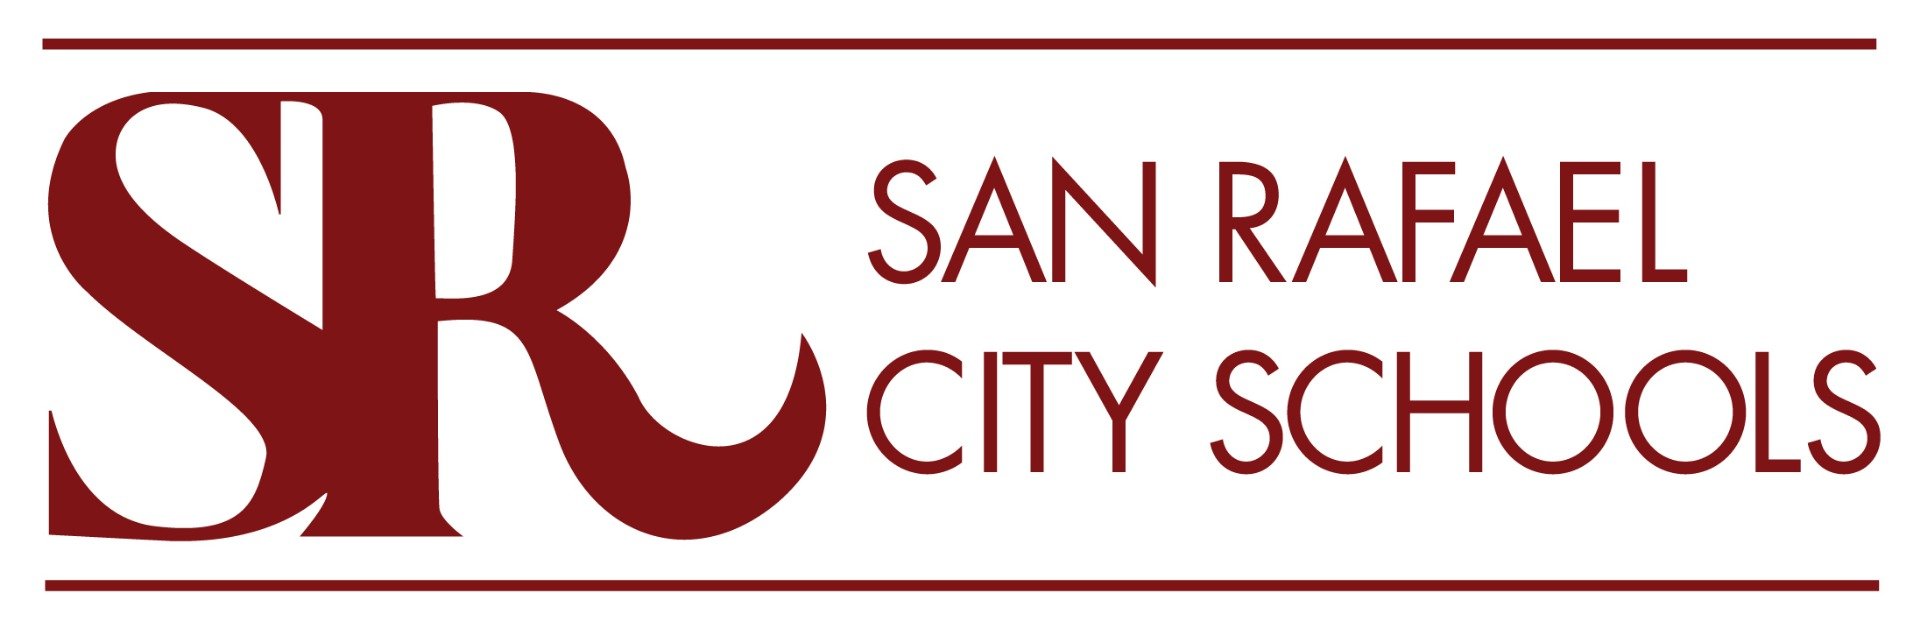 San Rafael City Schools logo.jpeg